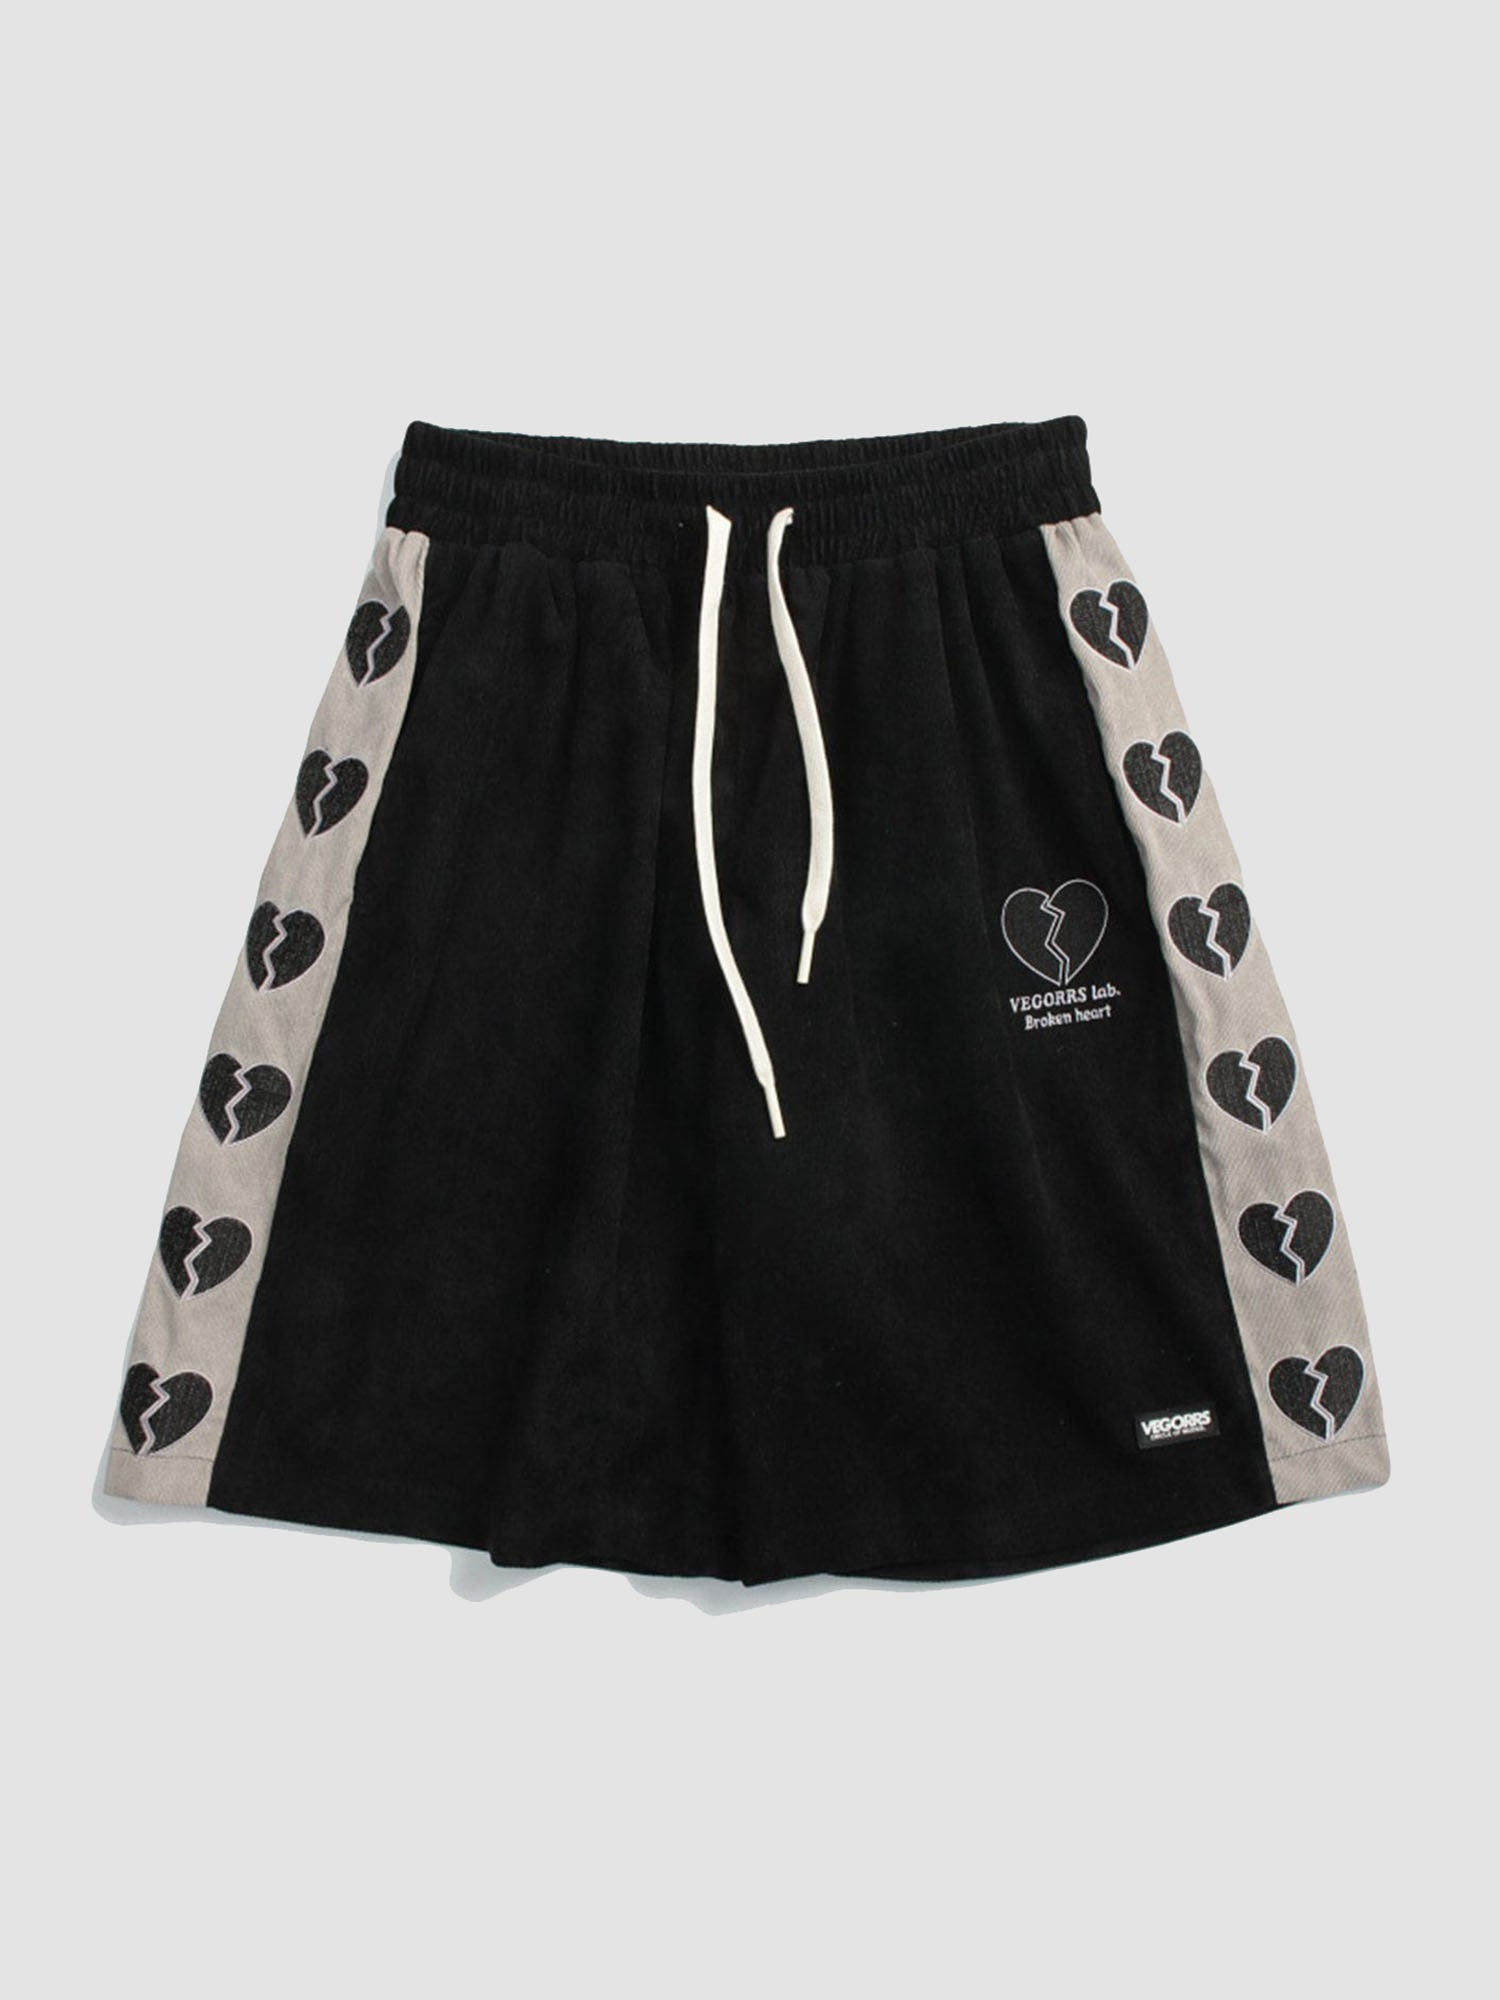 JUSTNOTAG Heartbreak Embroidered Sports Drawstring Waist Shorts